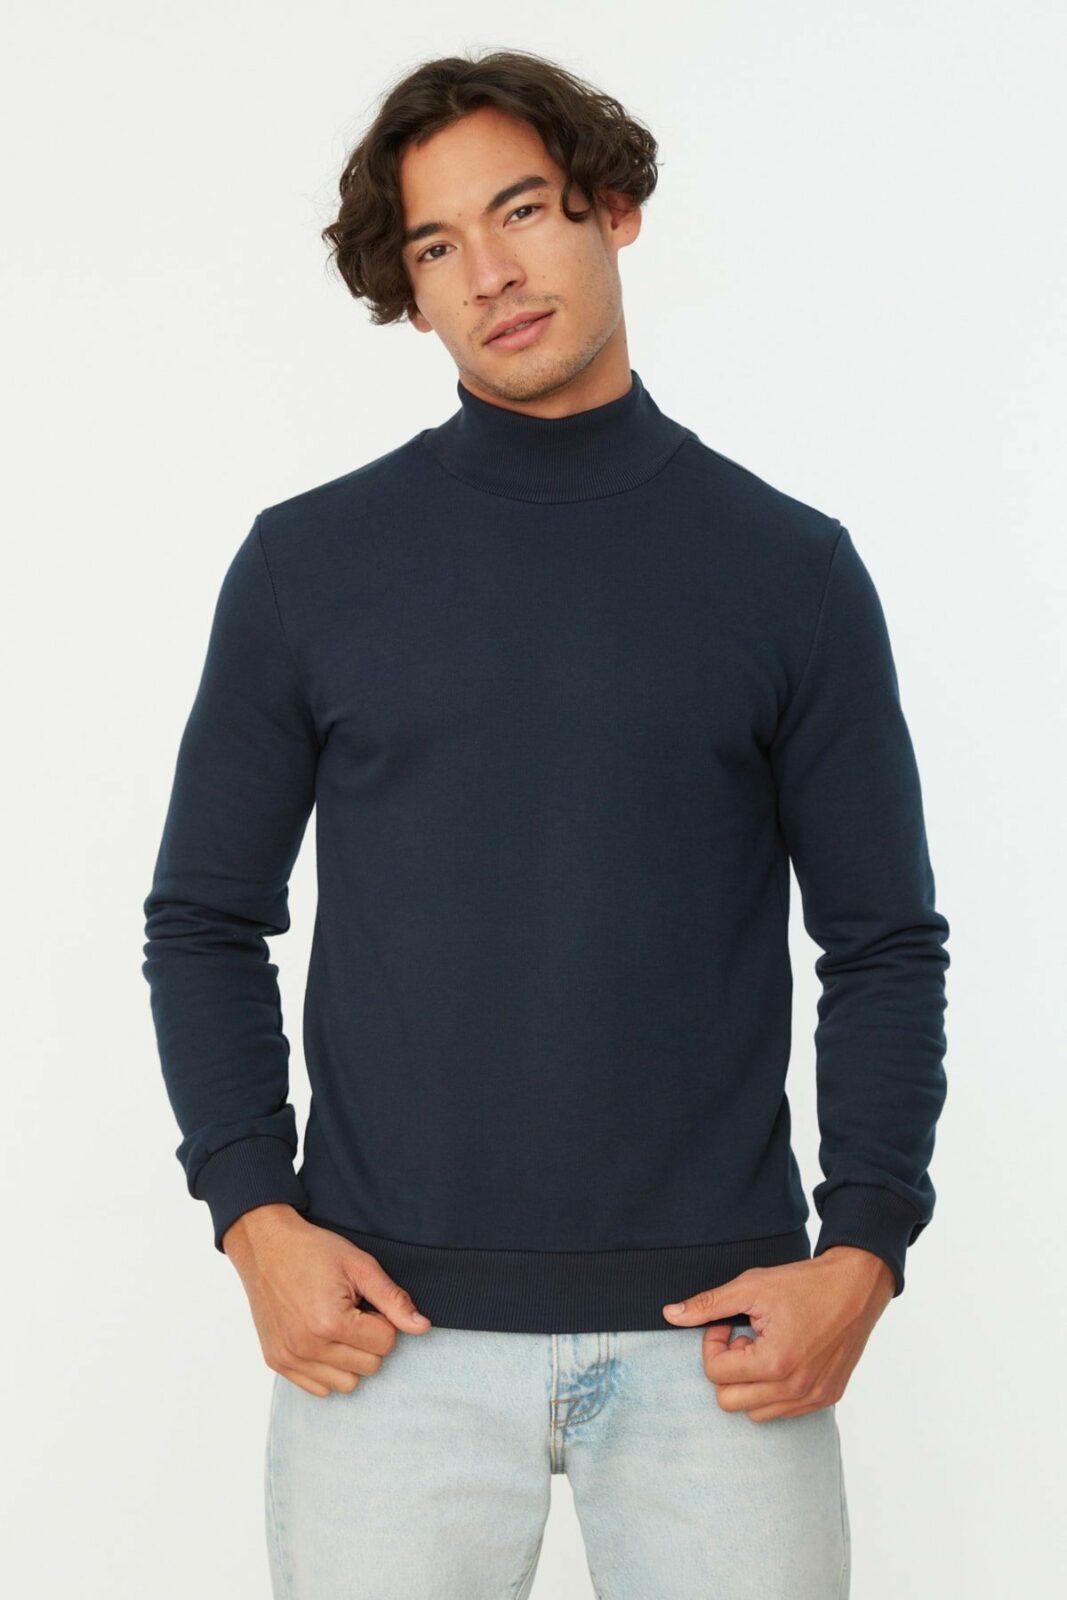 Trendyol Sweatshirt - Navy blue